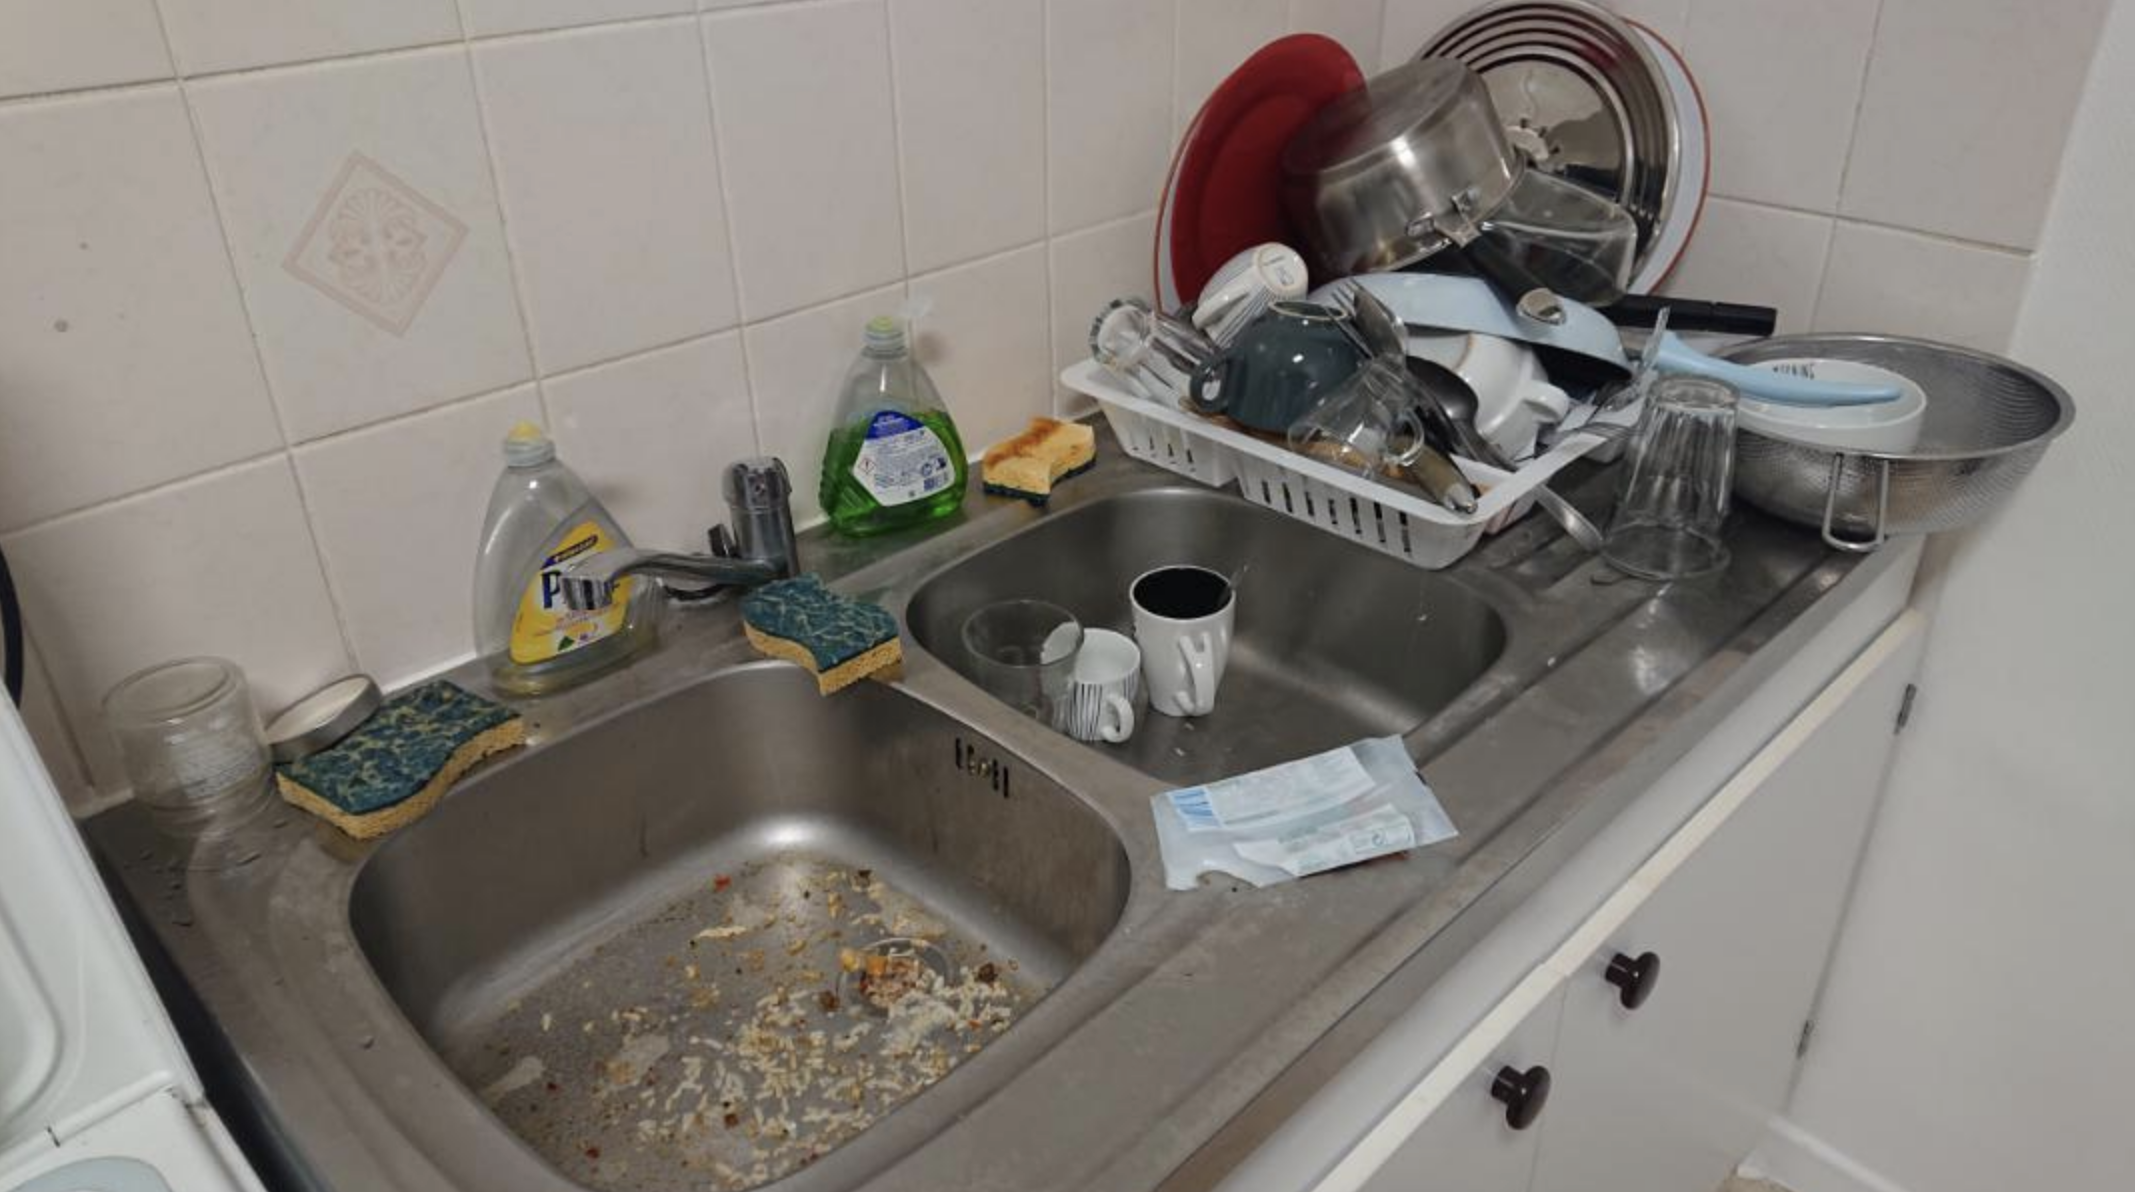 A dirty sink